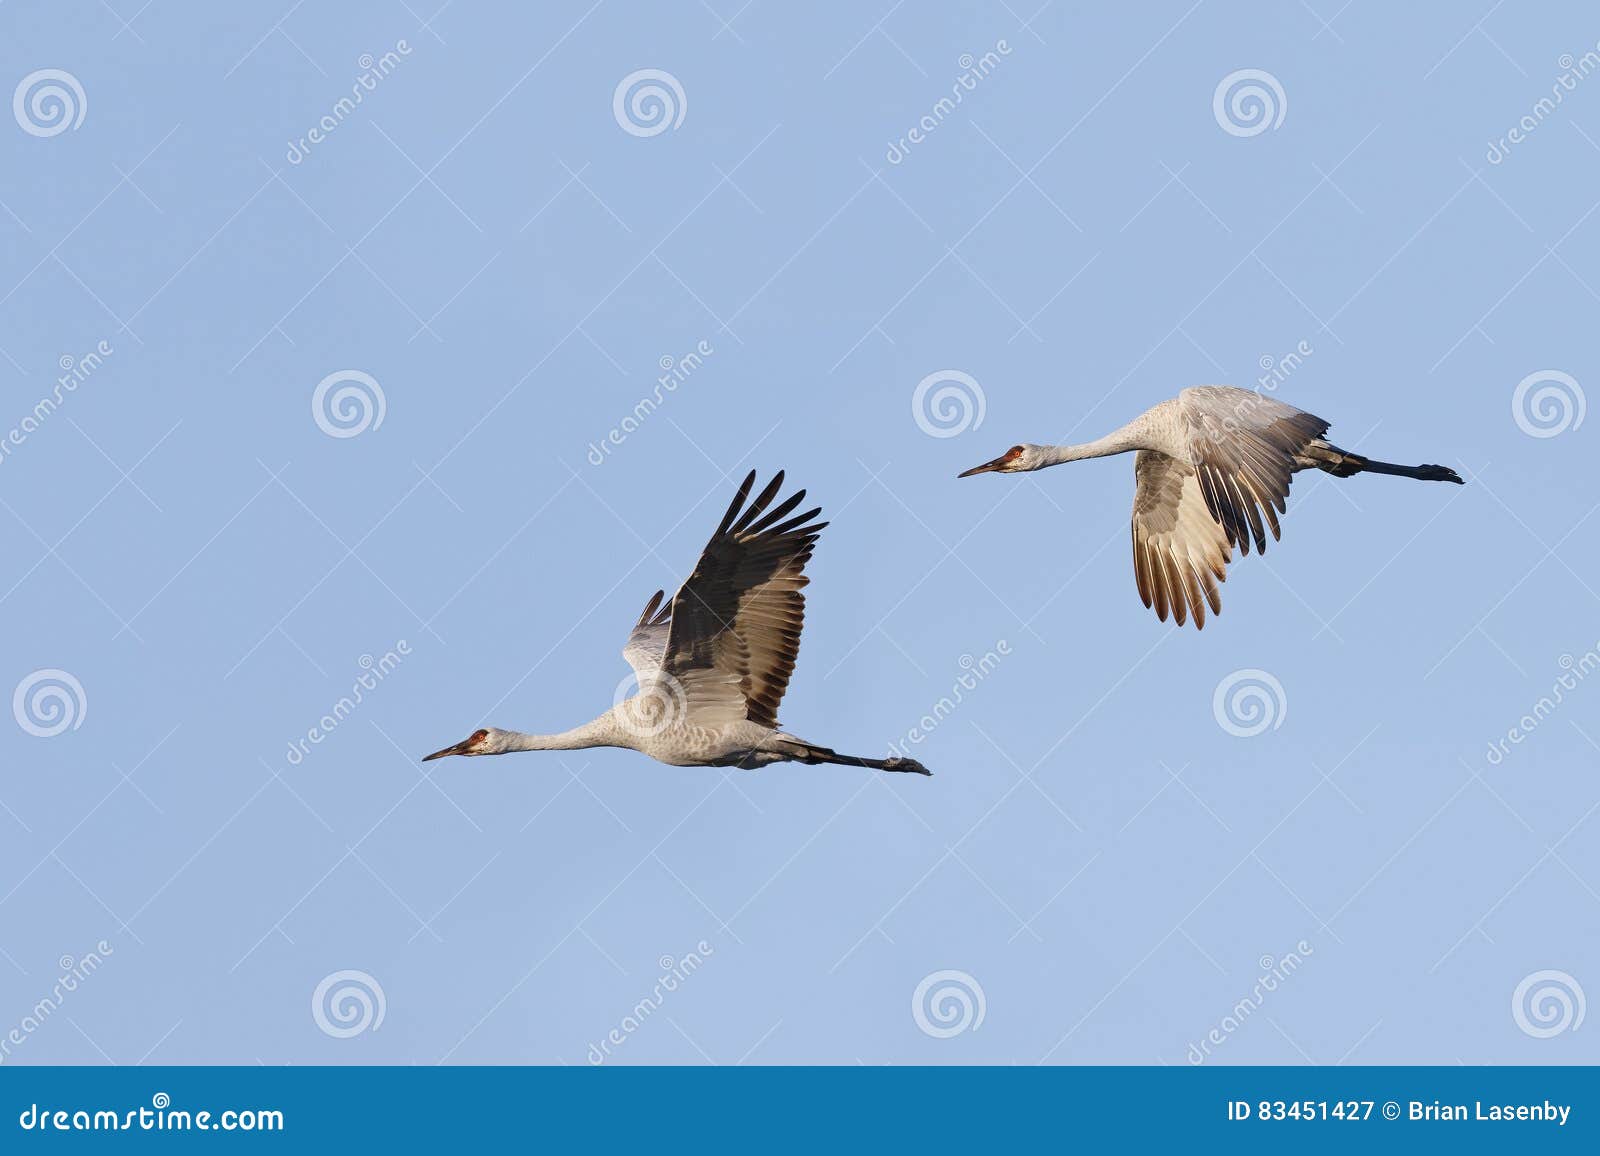 pair of sandhill cranes grus canadensis in flight - gainesvill